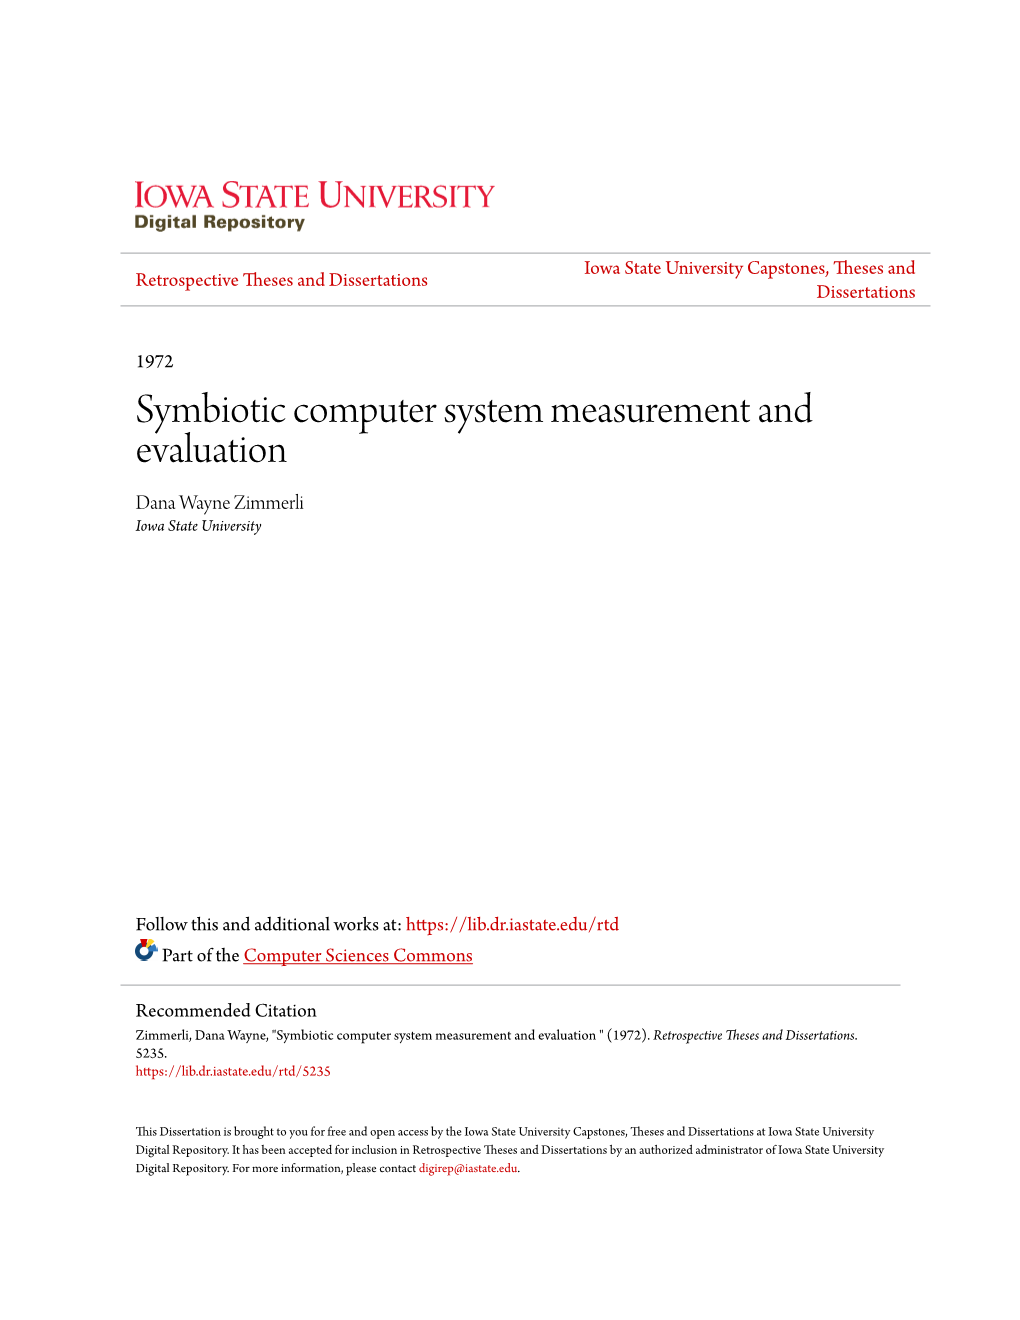 Symbiotic Computer System Measurement and Evaluation Dana Wayne Zimmerli Iowa State University